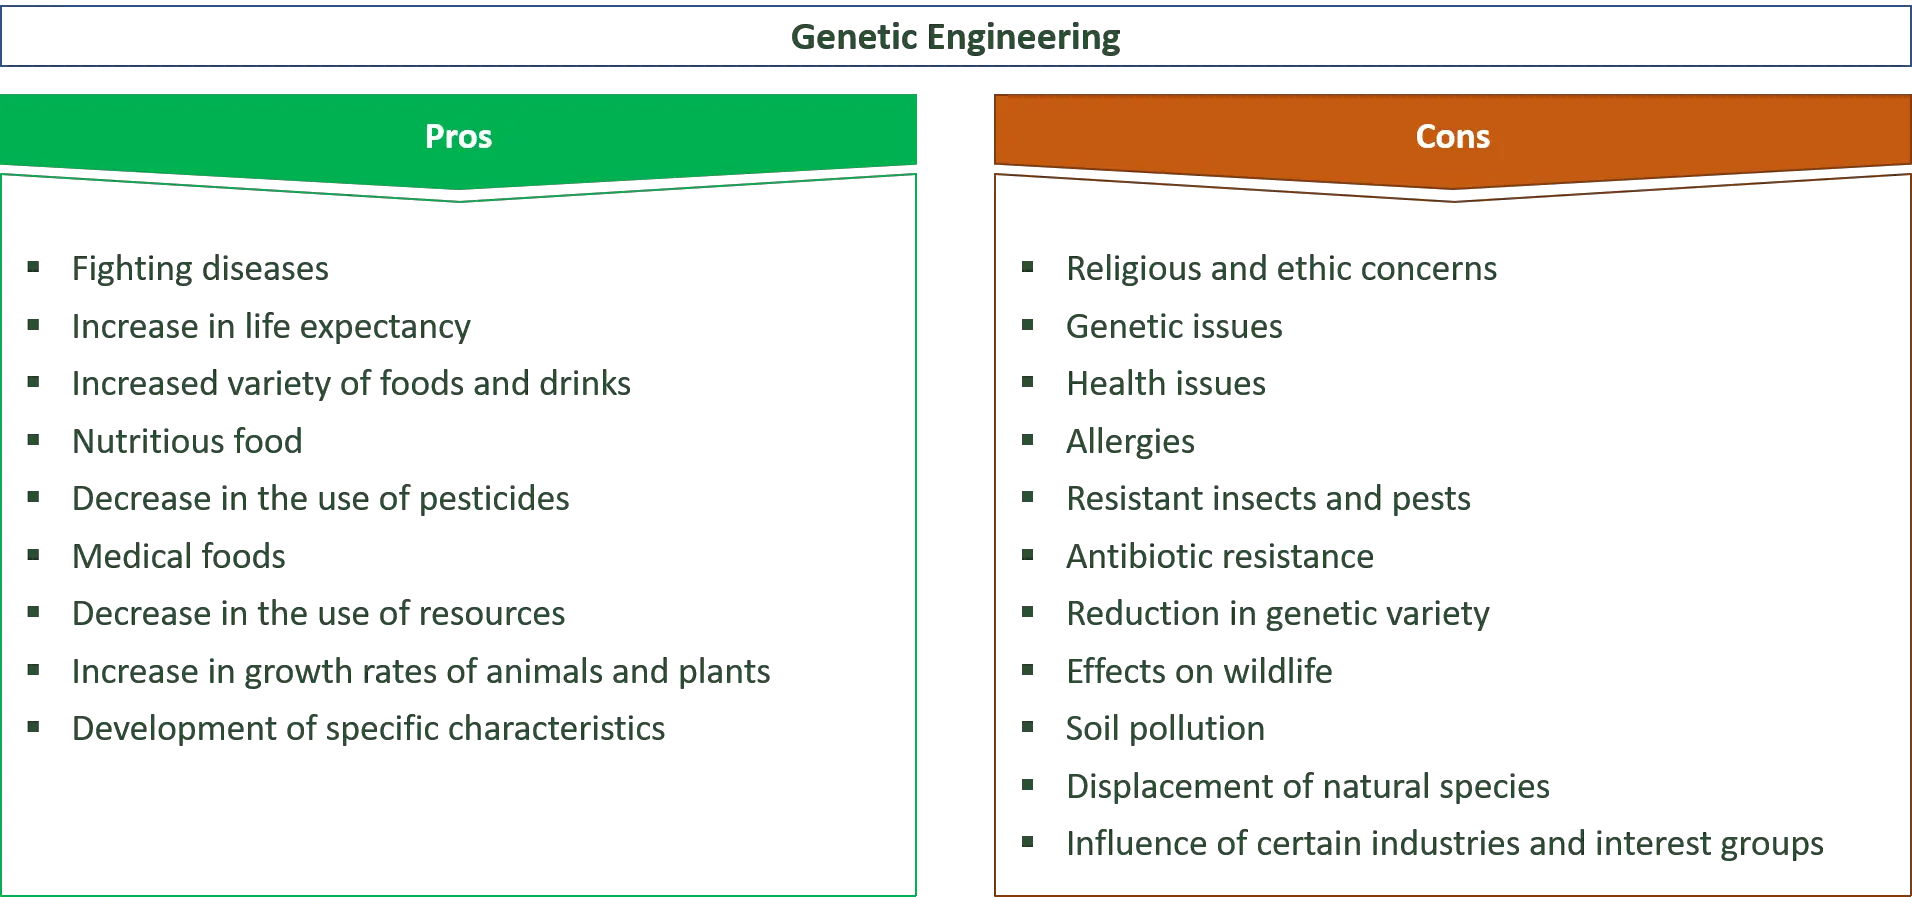 genetic engineering research paper topics